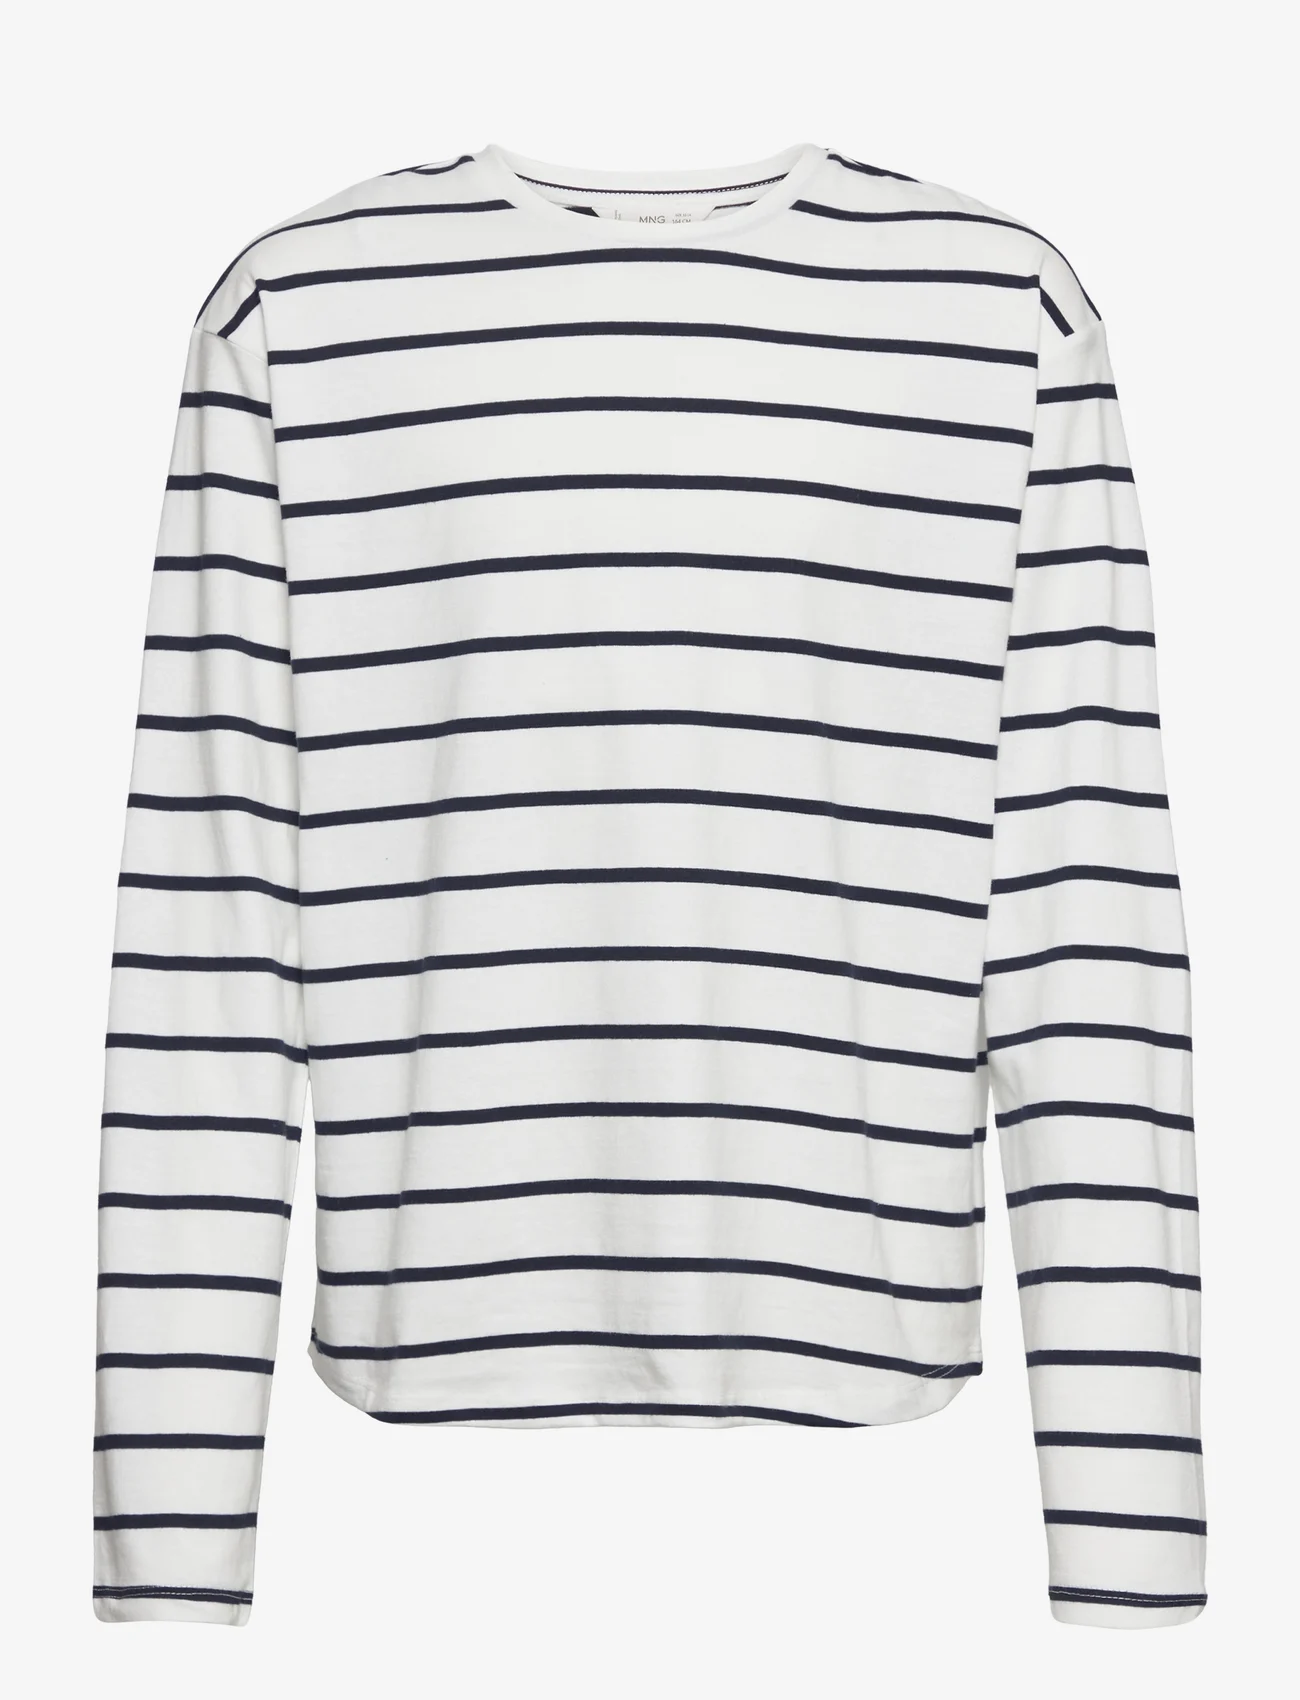 Mango - Striped long sleeves t-shirt - pitkähihaiset t-paidat - navy - 0